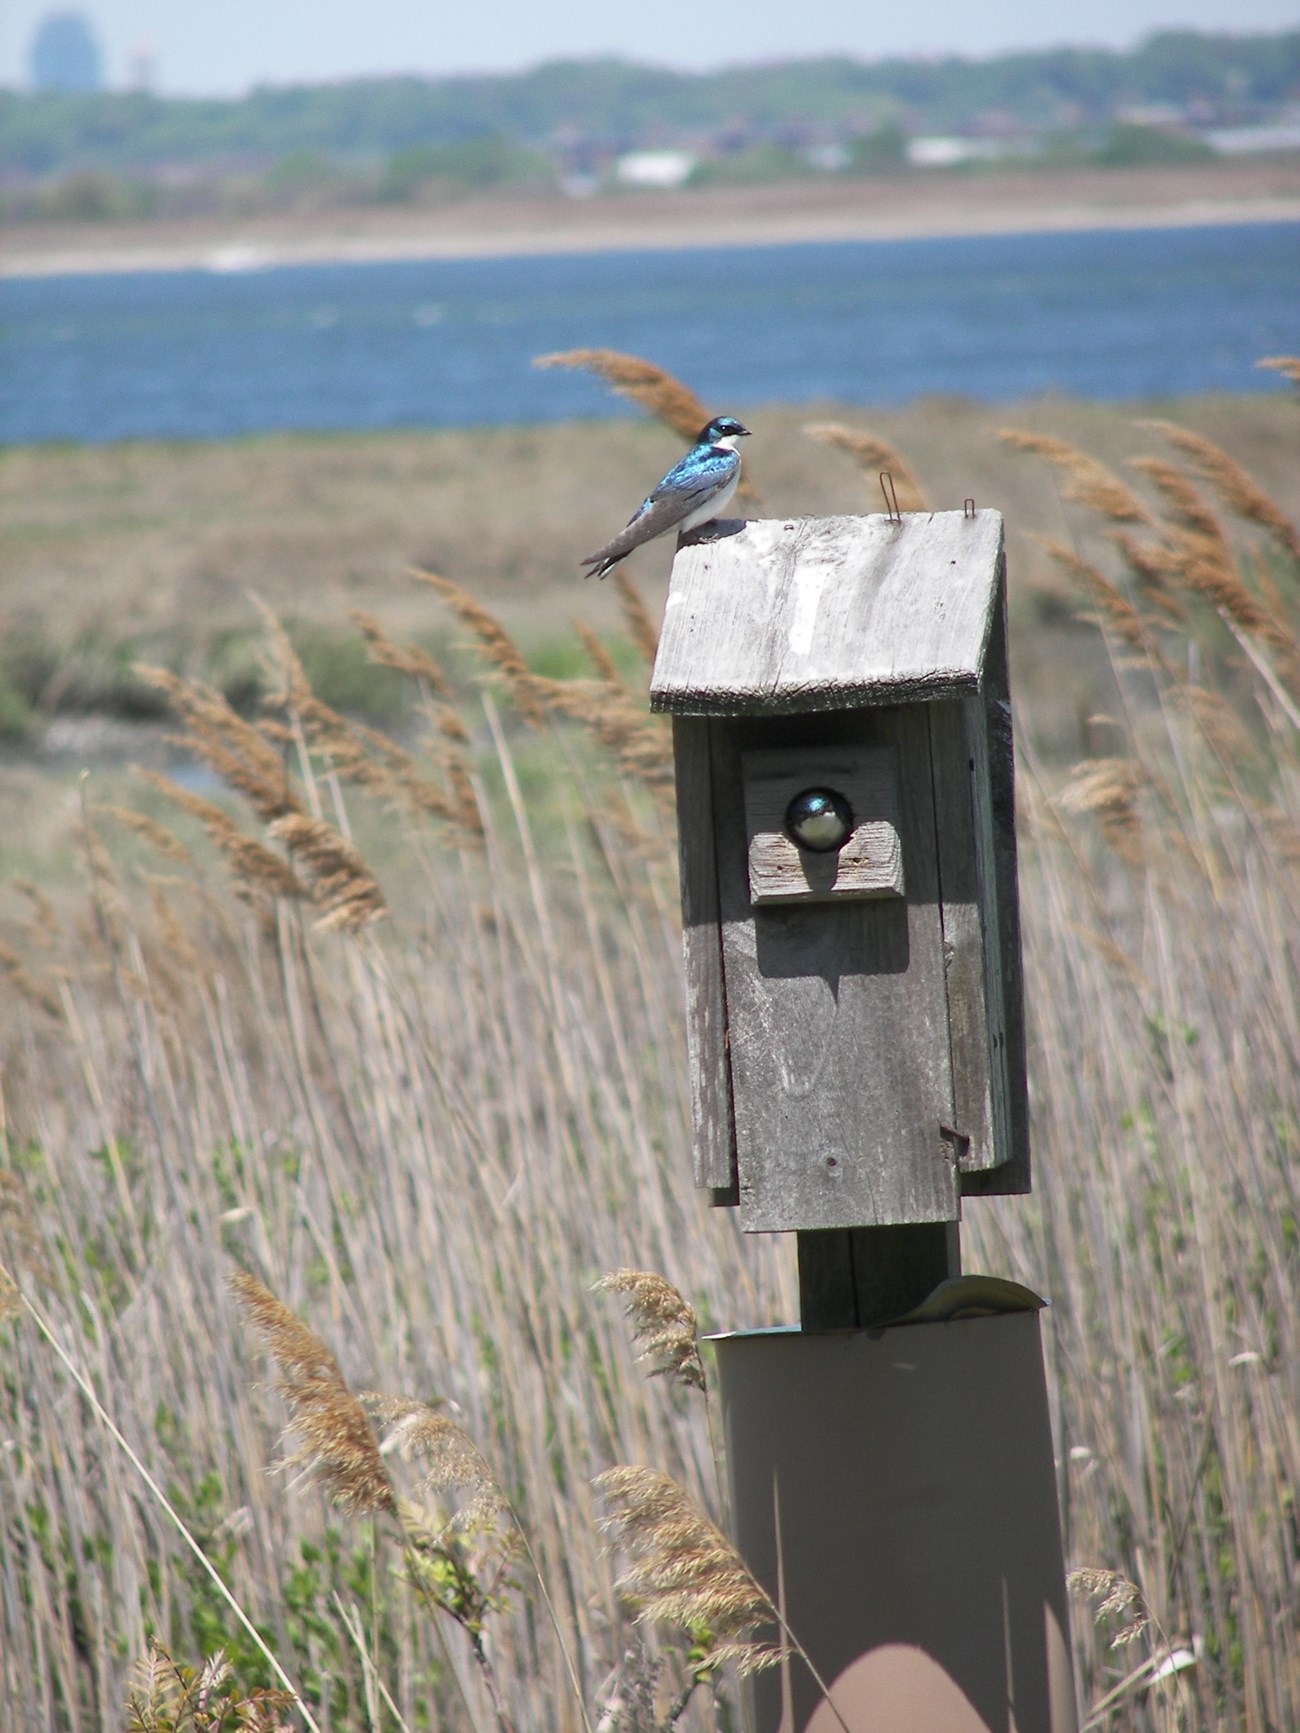 Iridescent blue and white bird in bird box